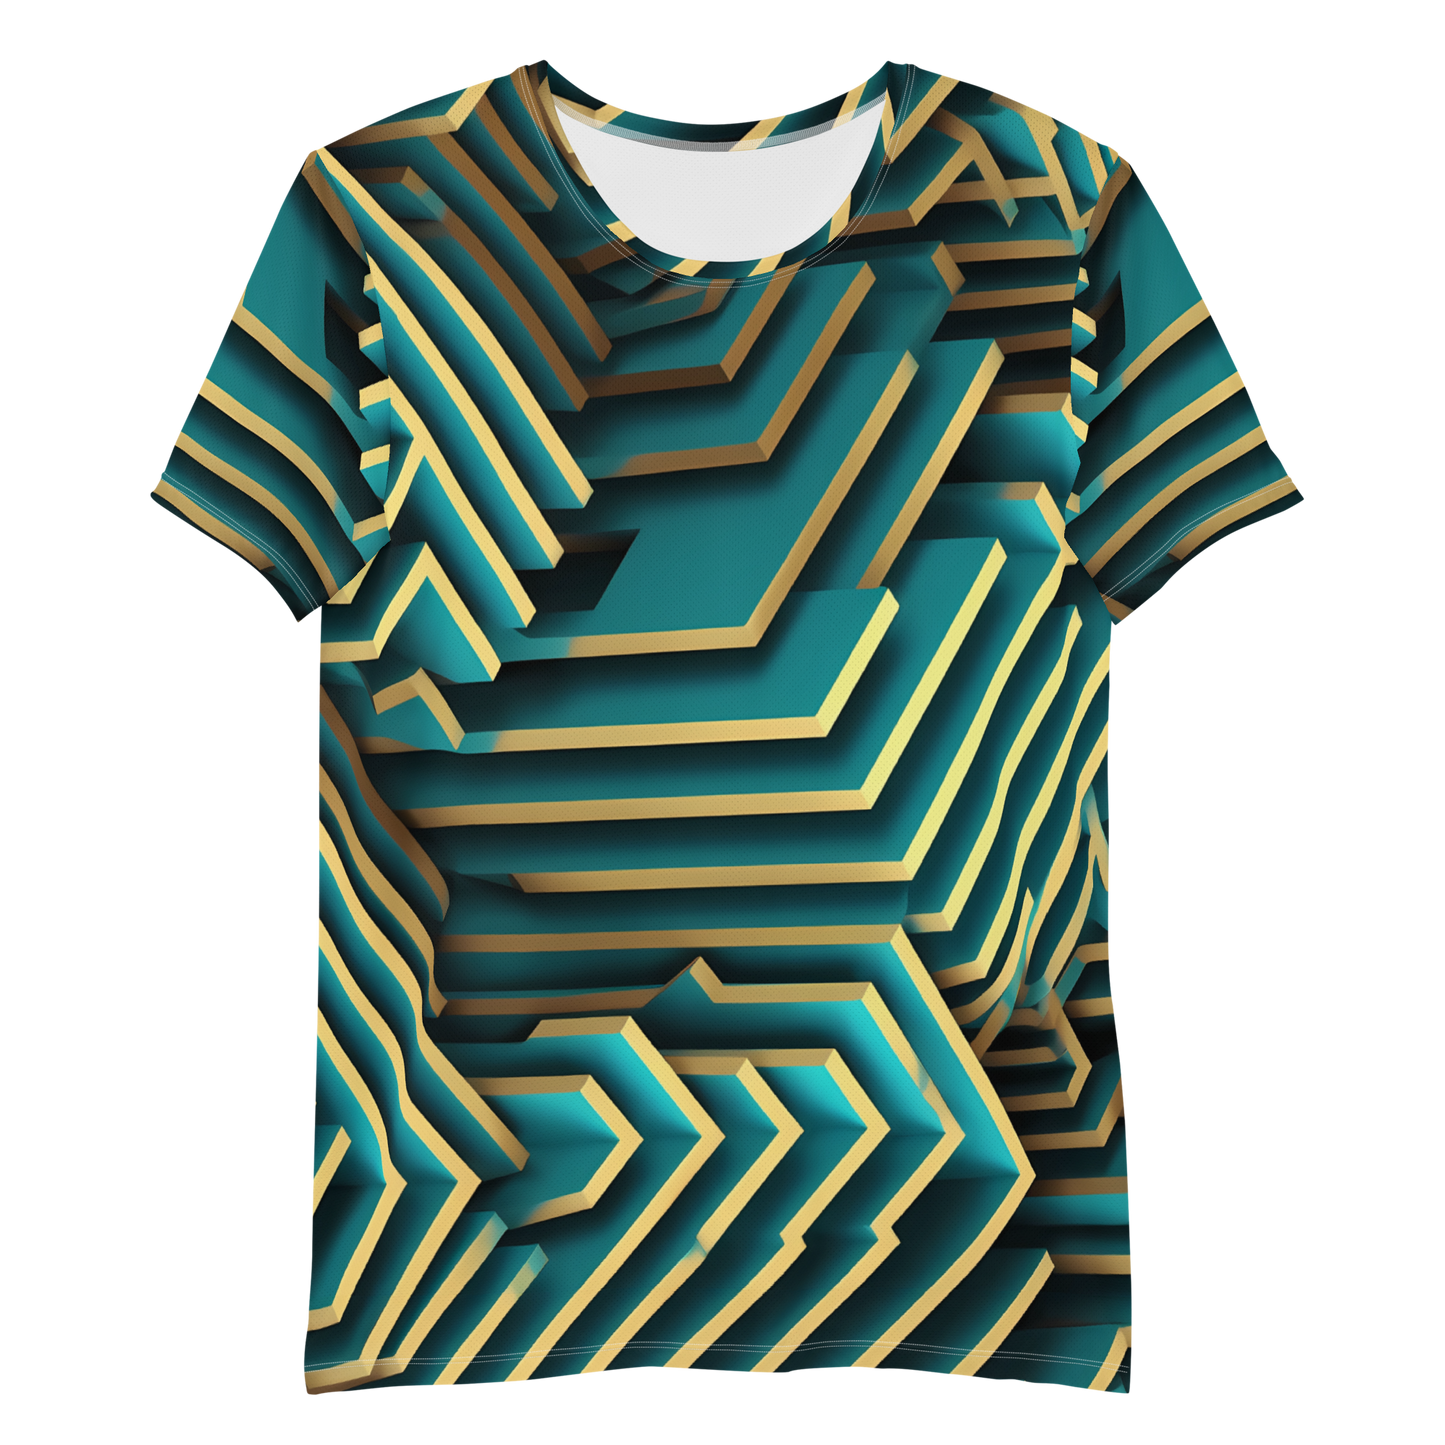 3D Maze Illusion | 3D Patterns | All-Over Print Men's Athletic T-Shirt - #5